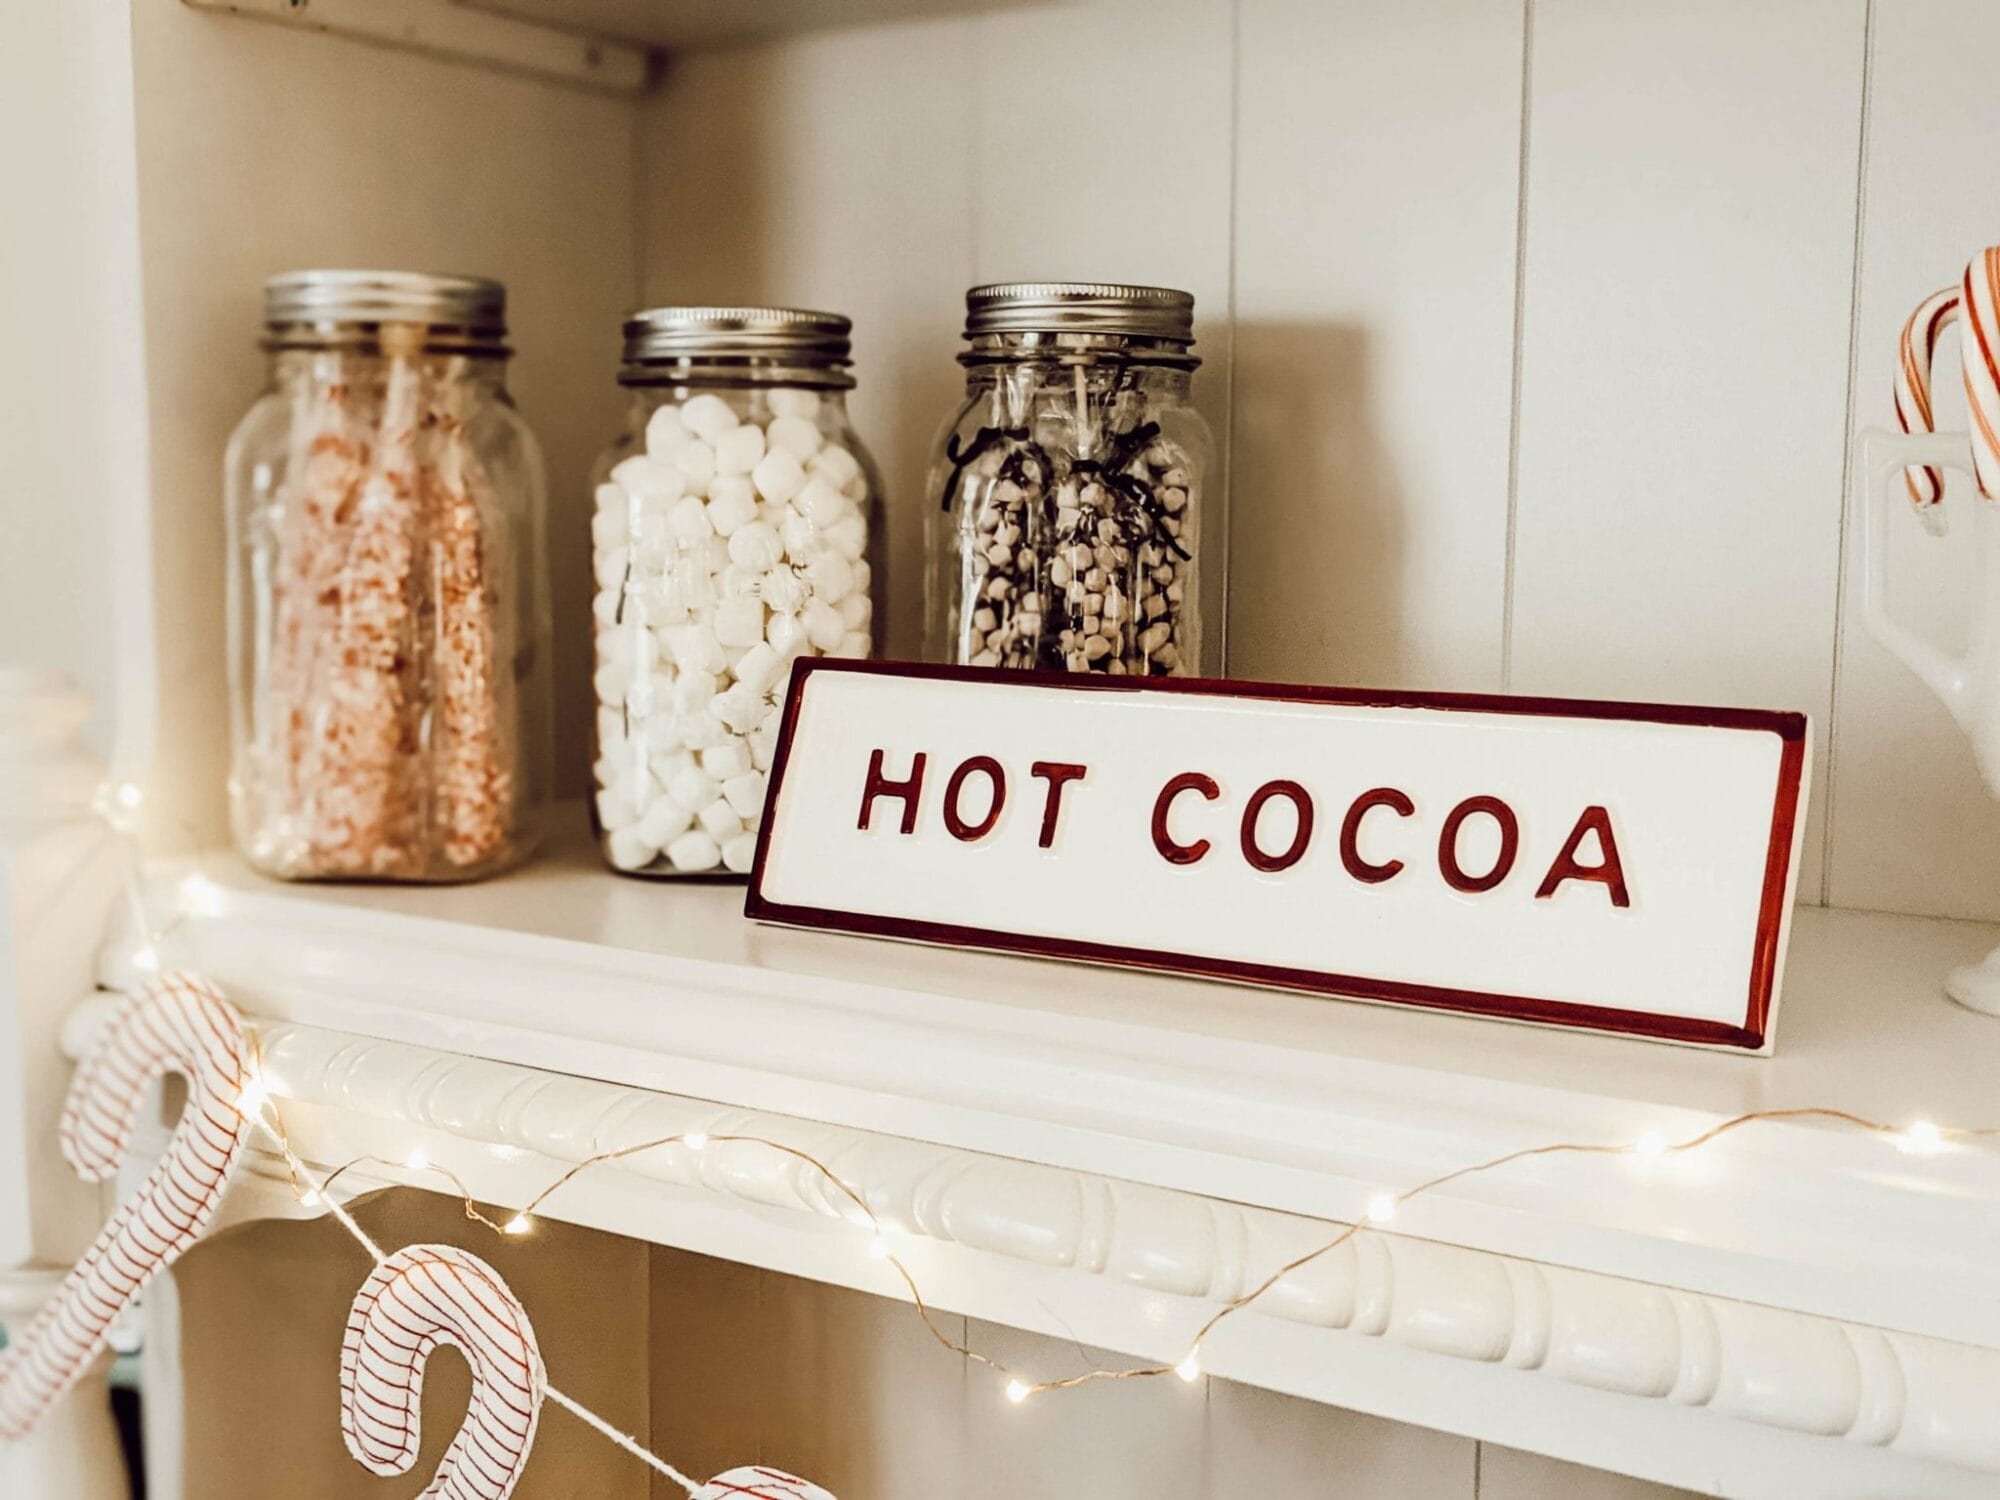 Holiday Home Tour: Hot Cocoa Bar